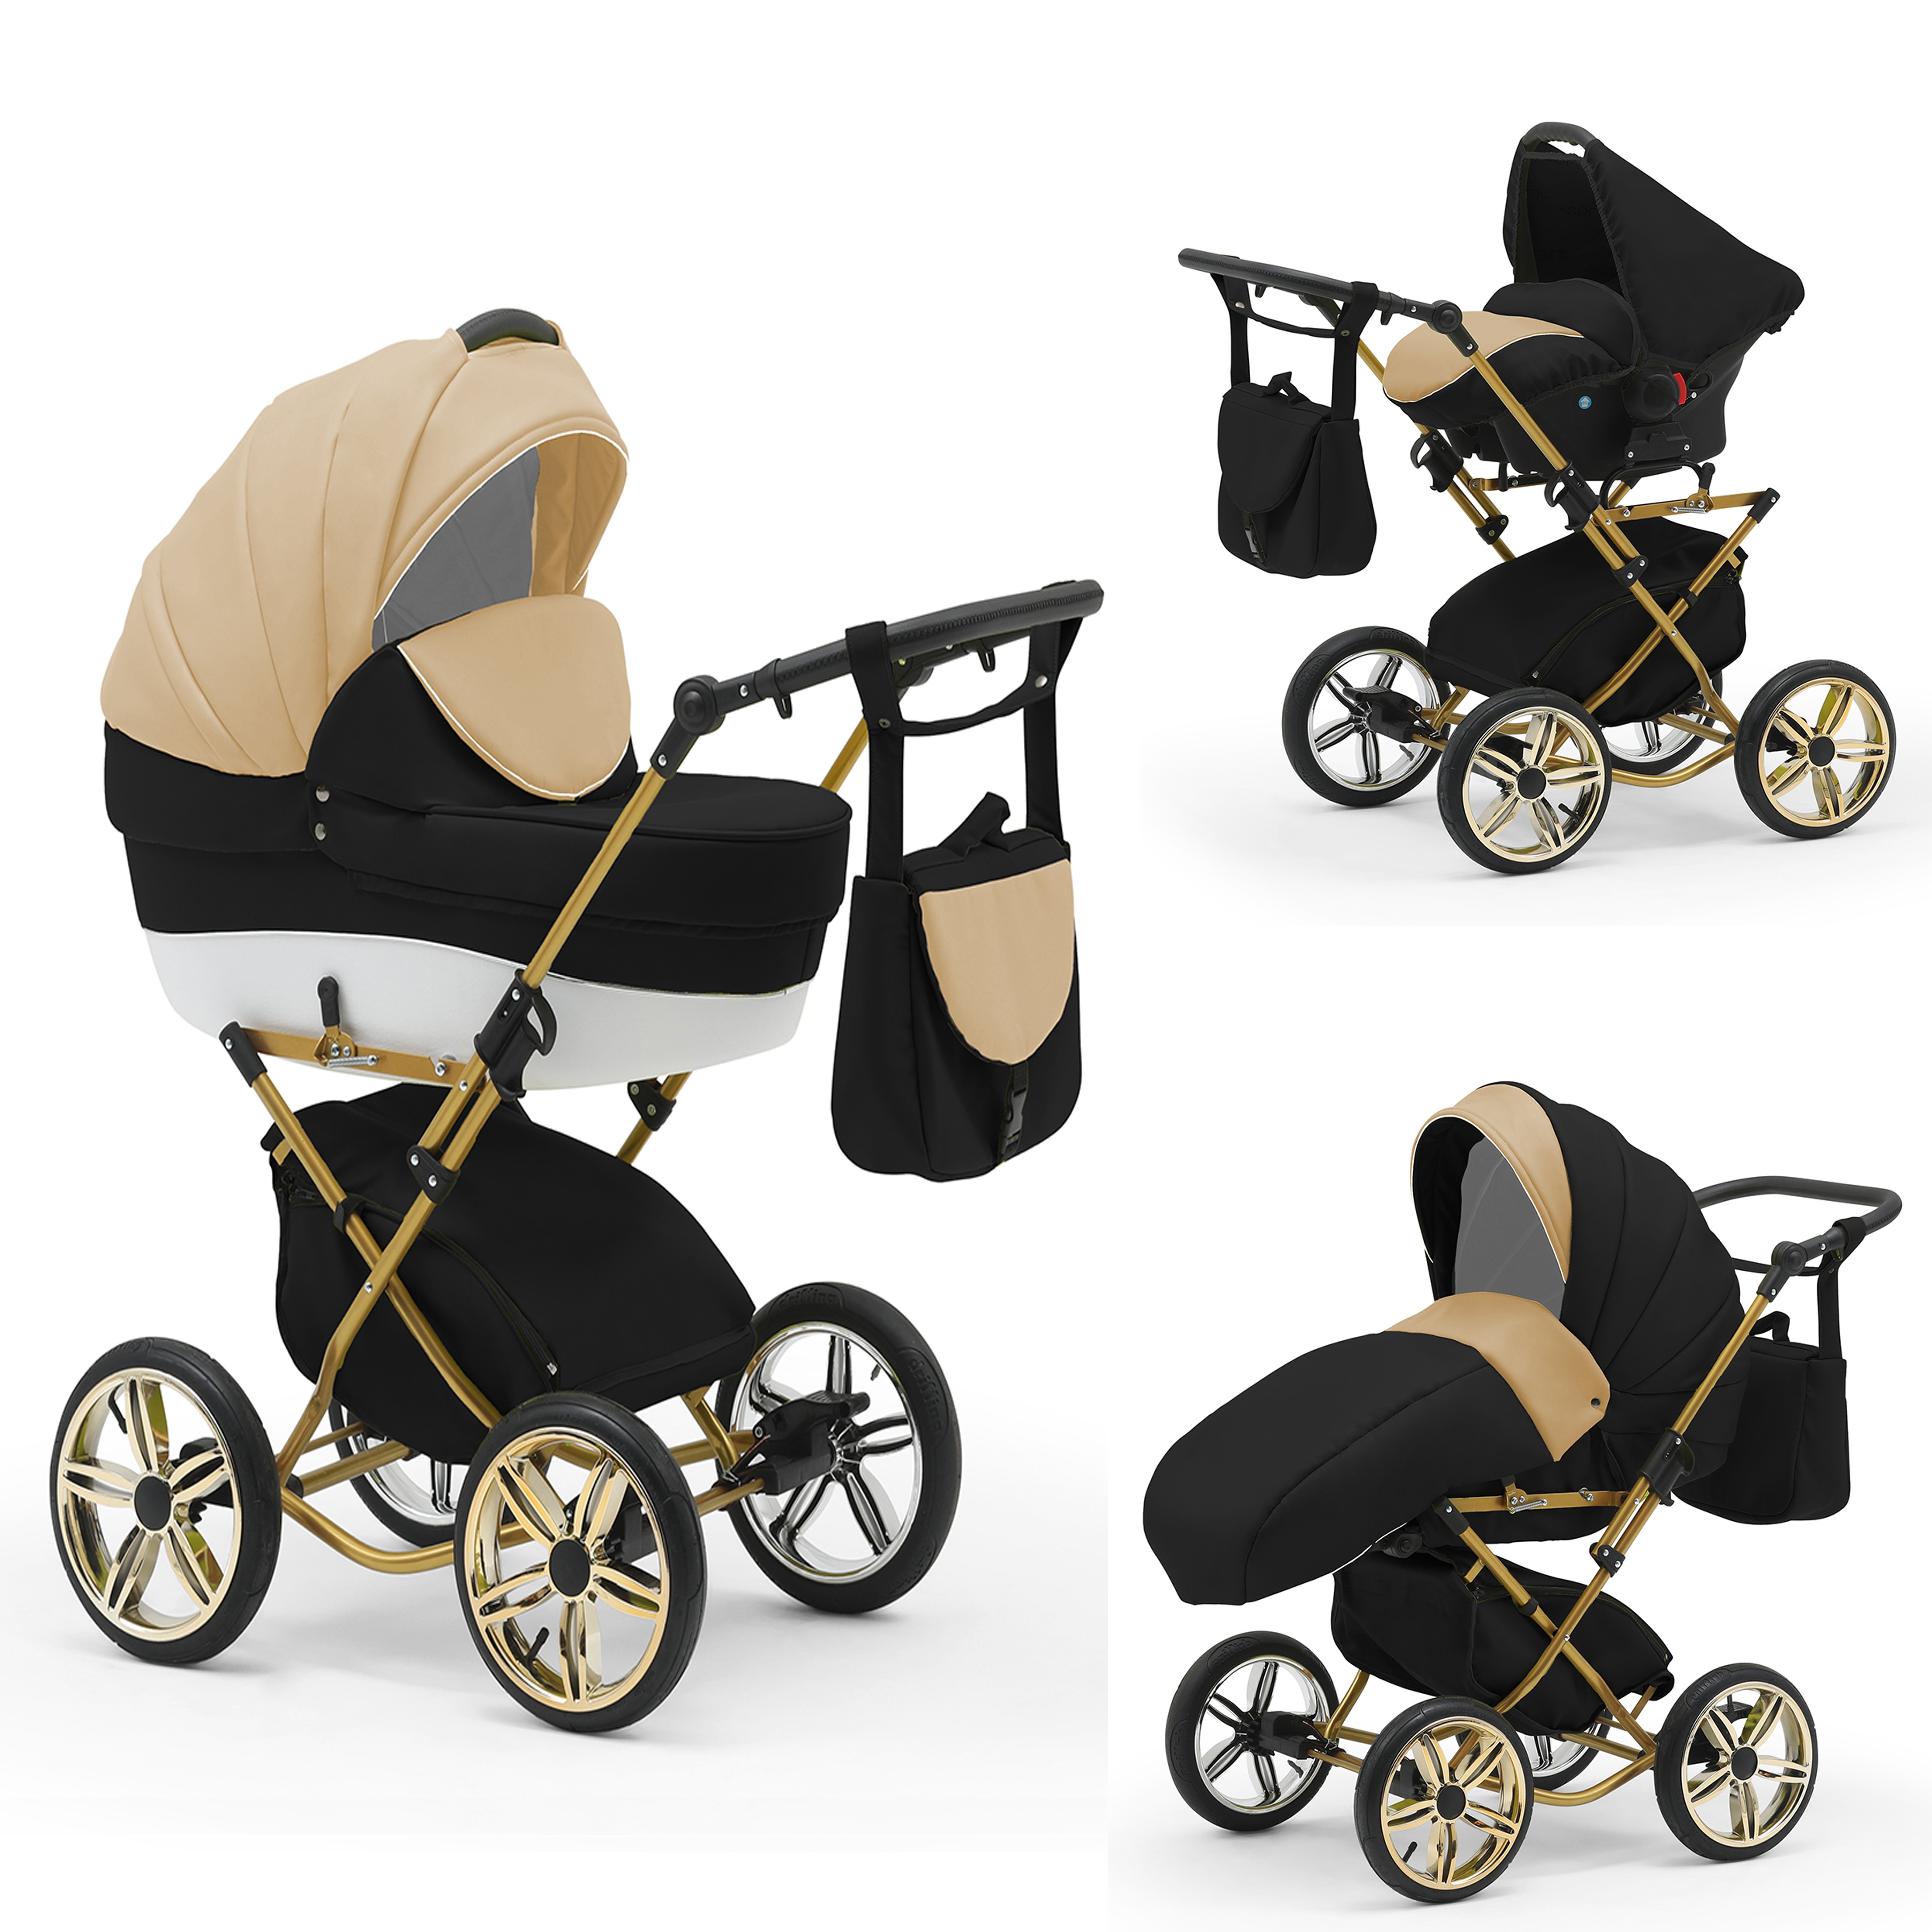 babies-on-wheels Kombi-Kinderwagen Sorento 3 in 1 inkl. Autositz - 13 Teile - in 10 Designs Beige-Schwarz-Weiß